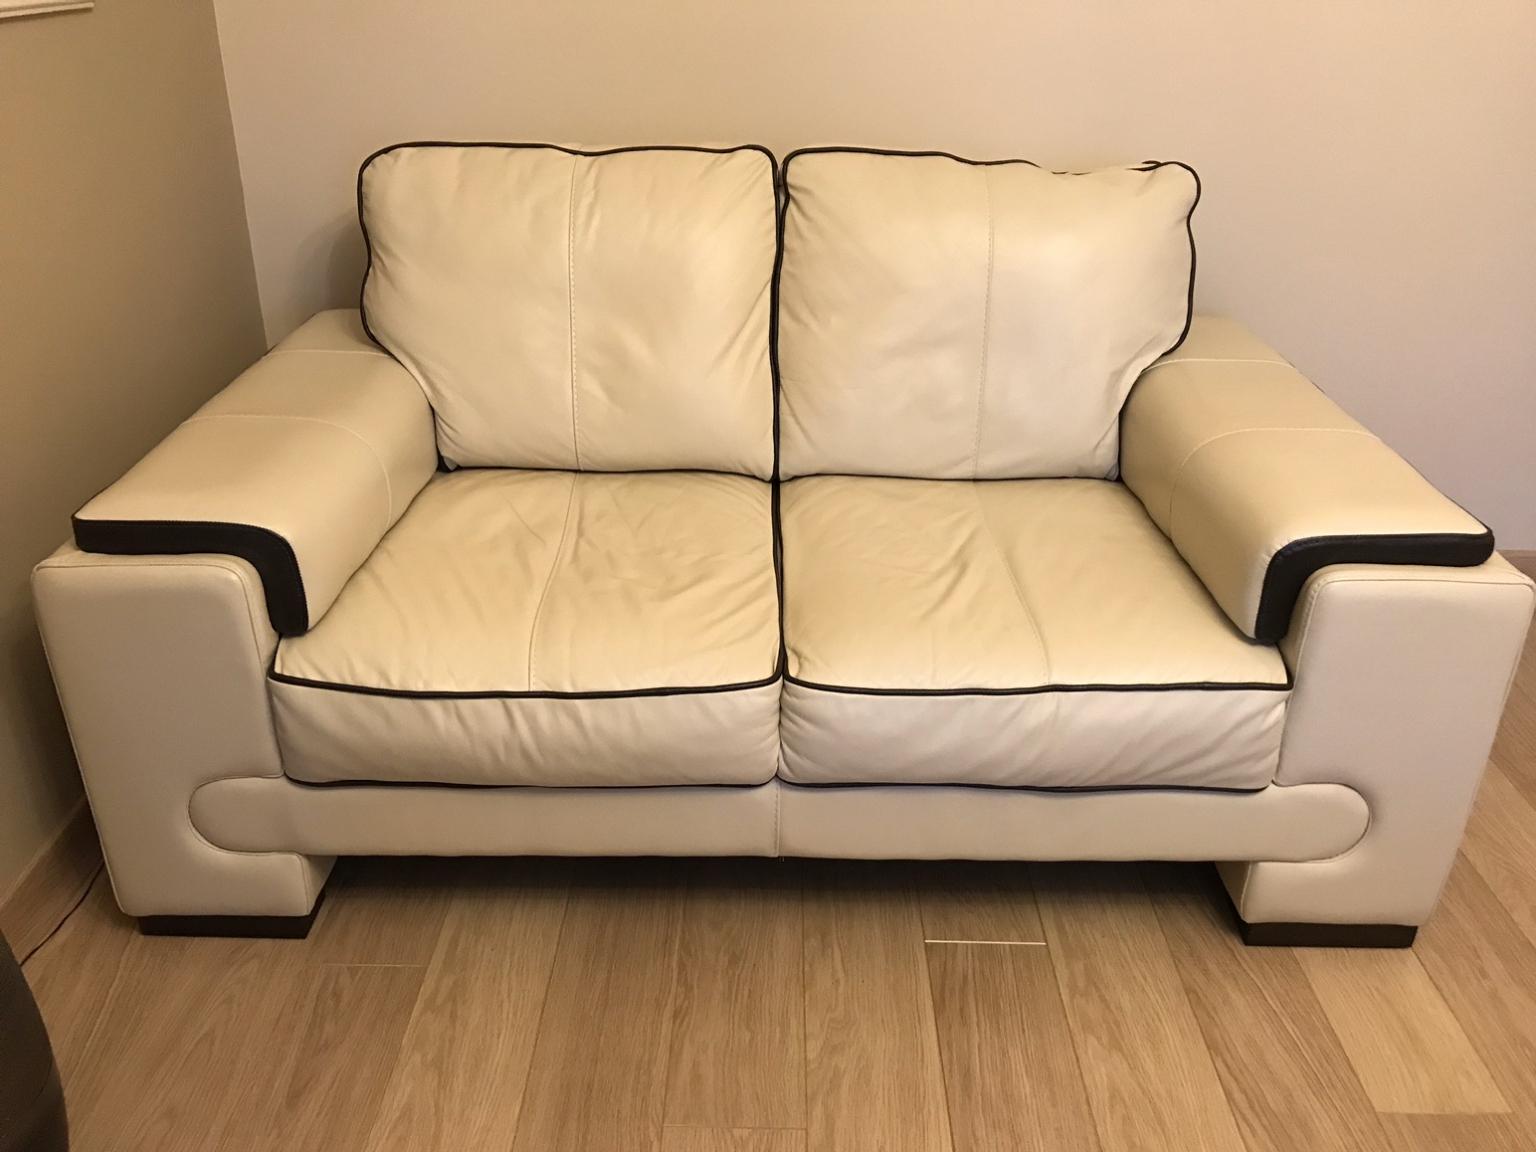 dfs leather sofa beds sale